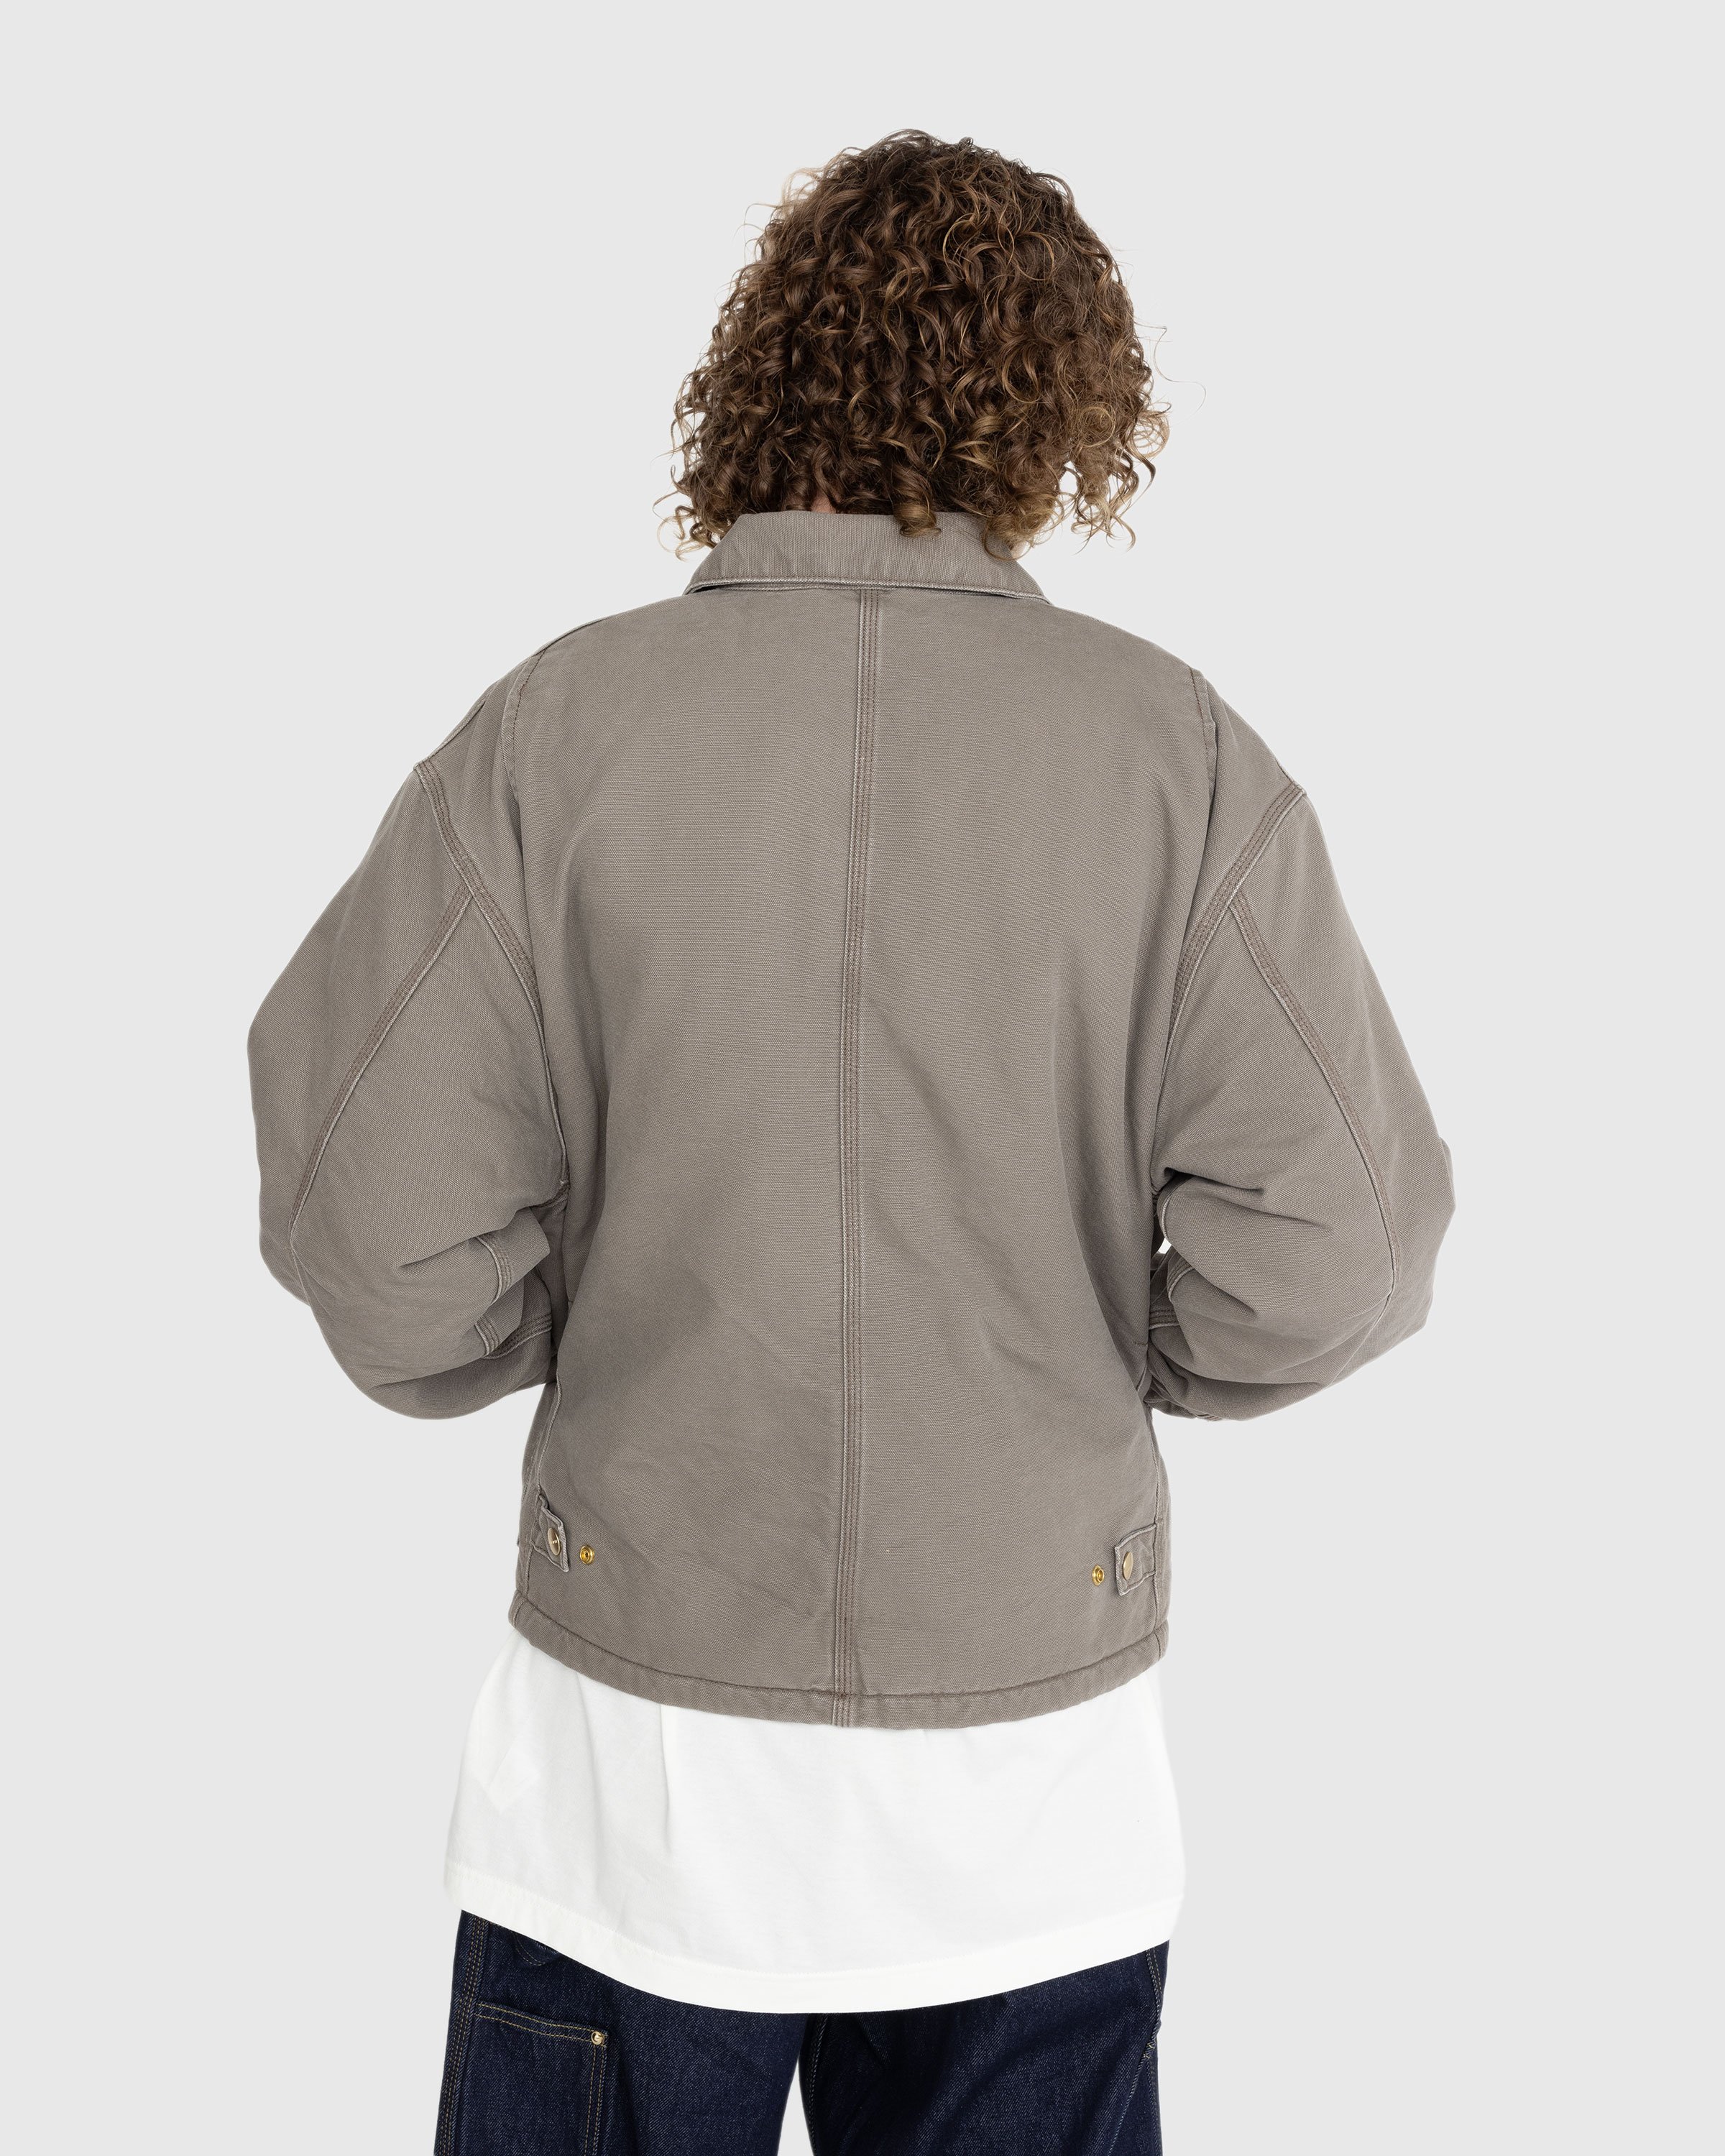 Carhartt WIP - OG Arcan Jacket Barista/Aged Canvas - Clothing - Multi - Image 3